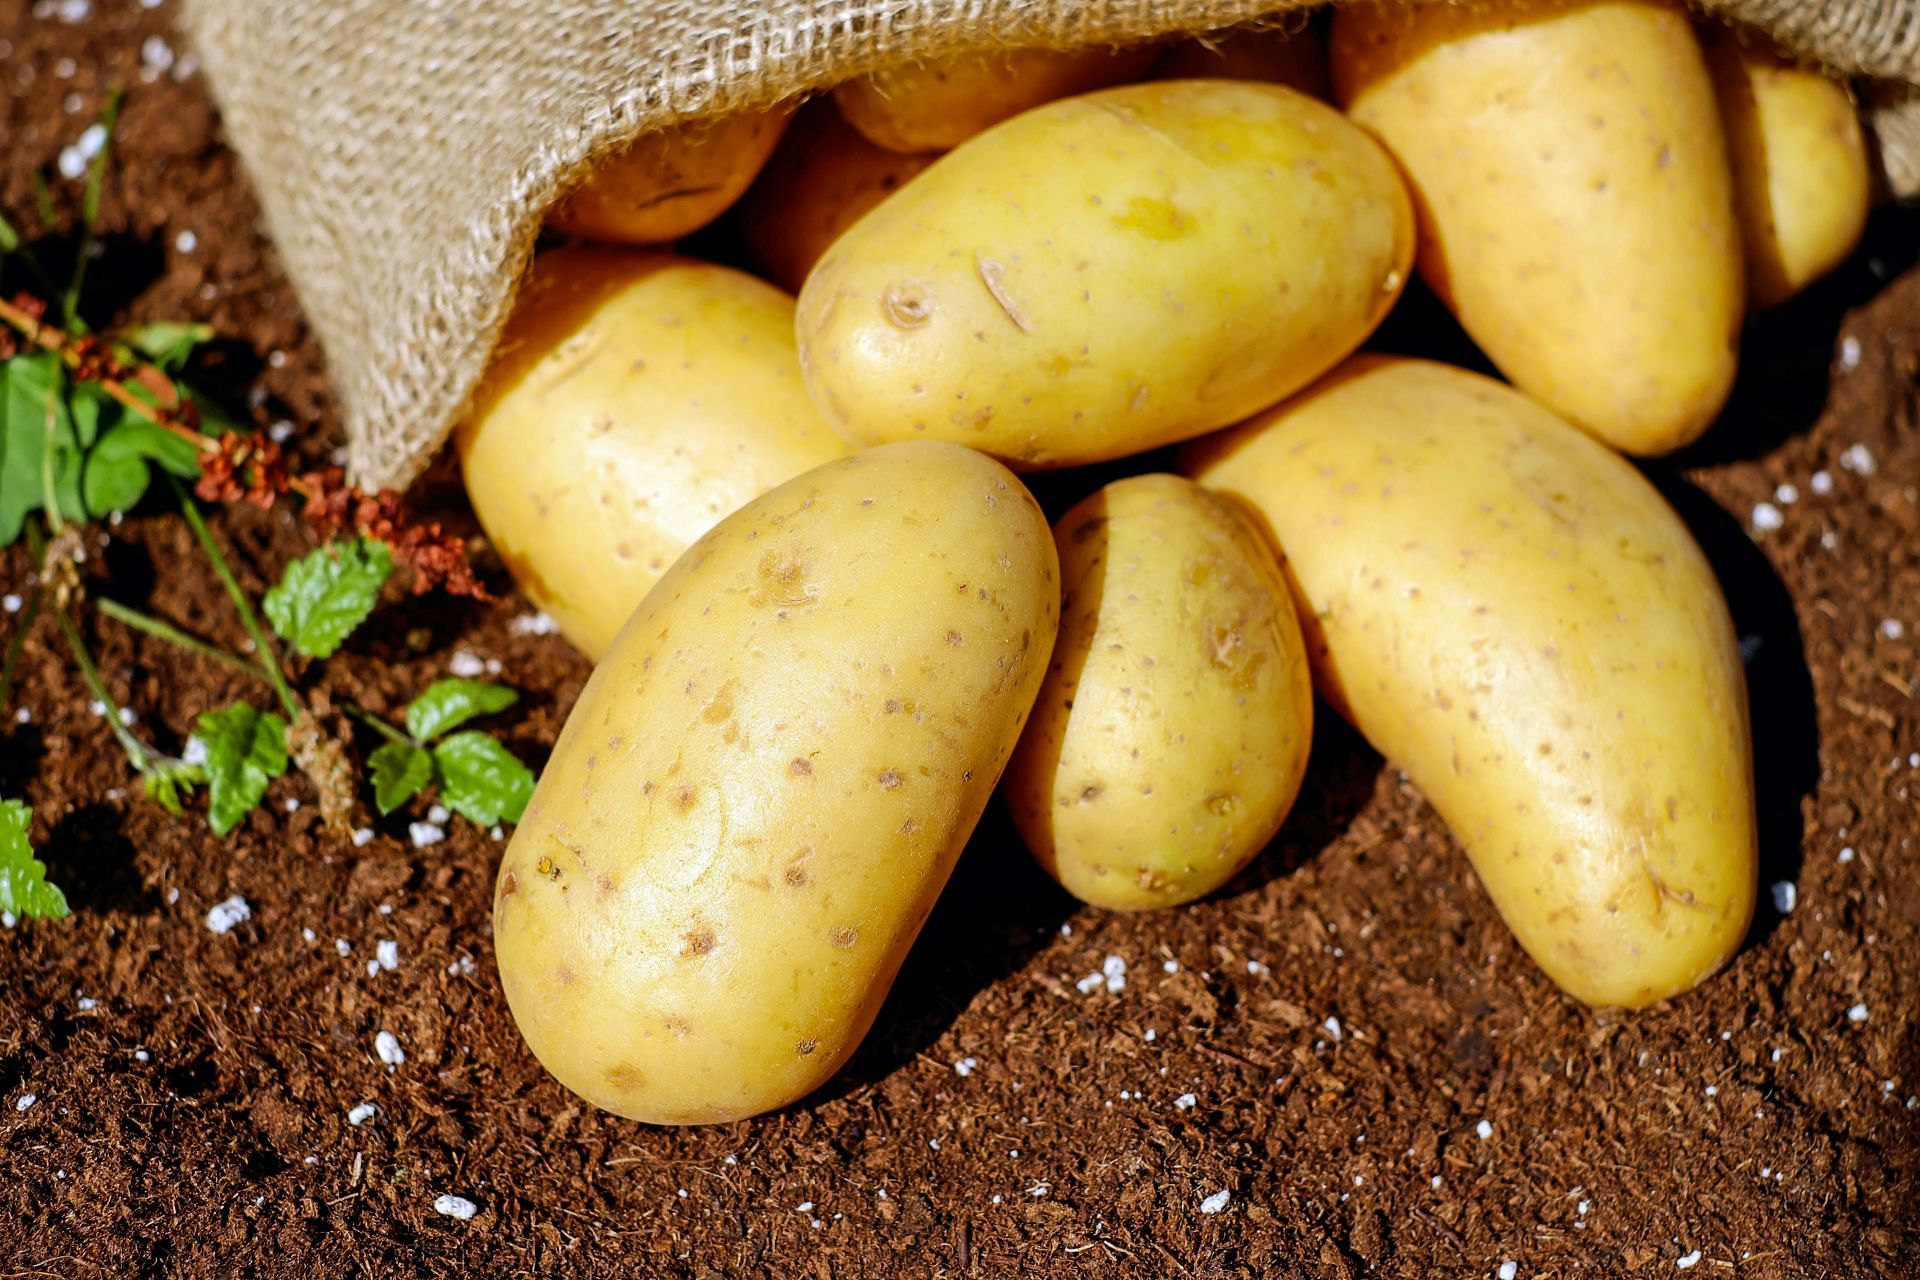 healthiest potatoes (image sourced via Pexels / Photo by pixabay)